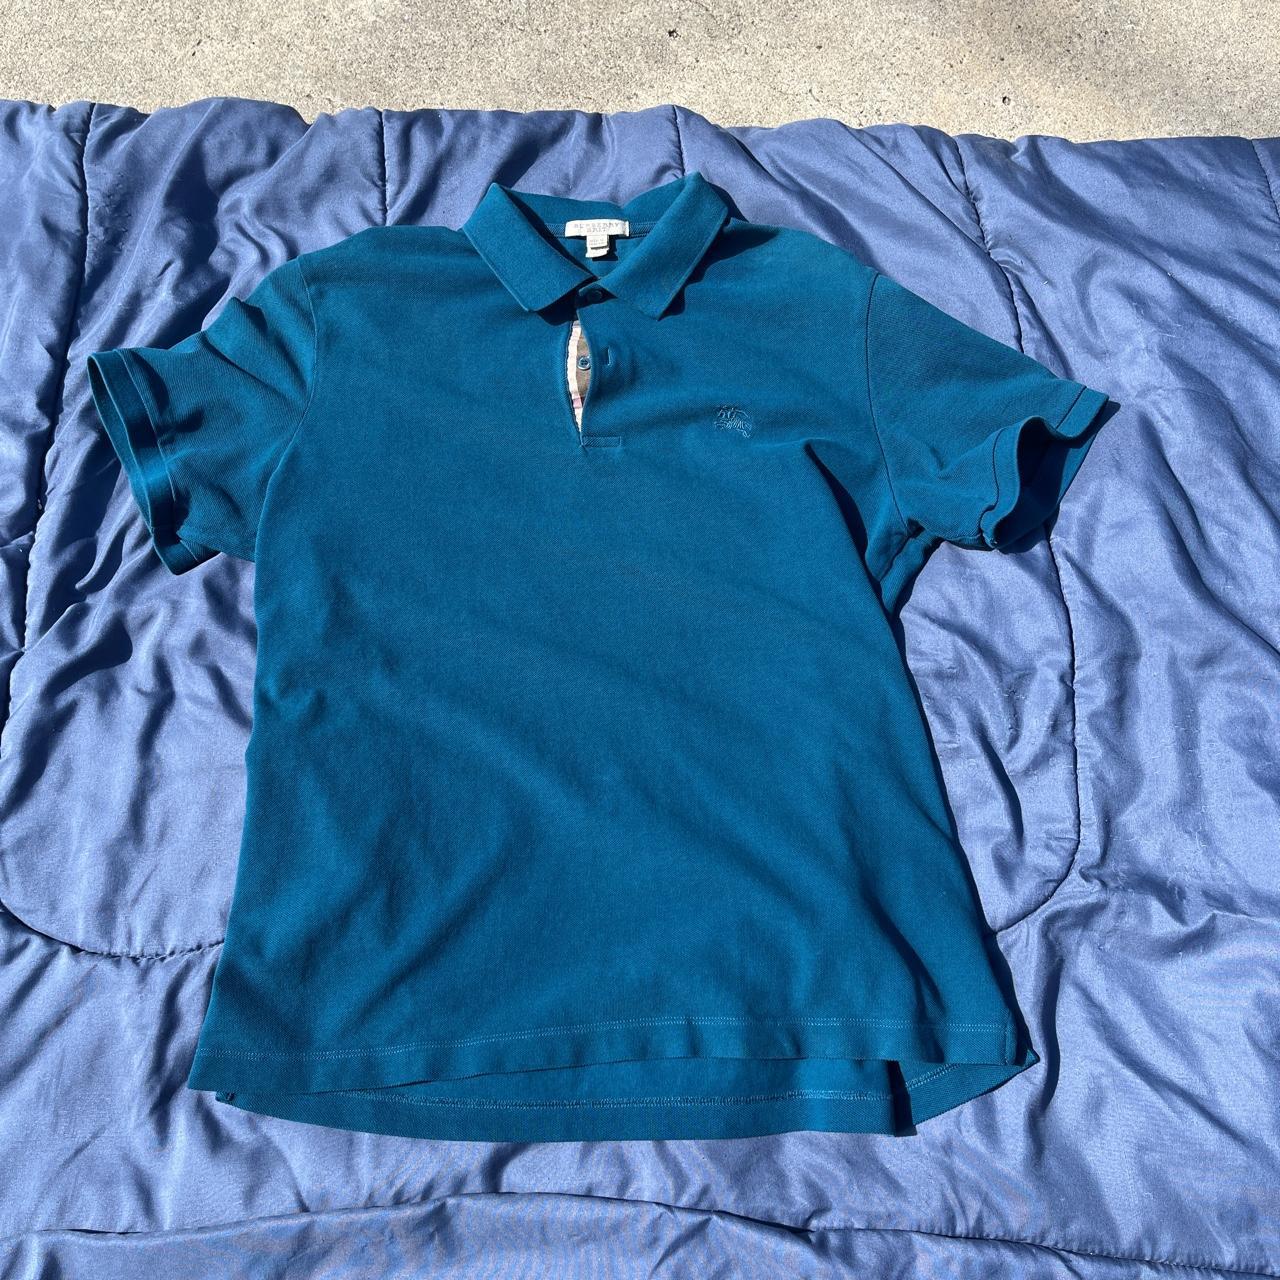 burberry polo shirt like new size XL (DM me with... - Depop